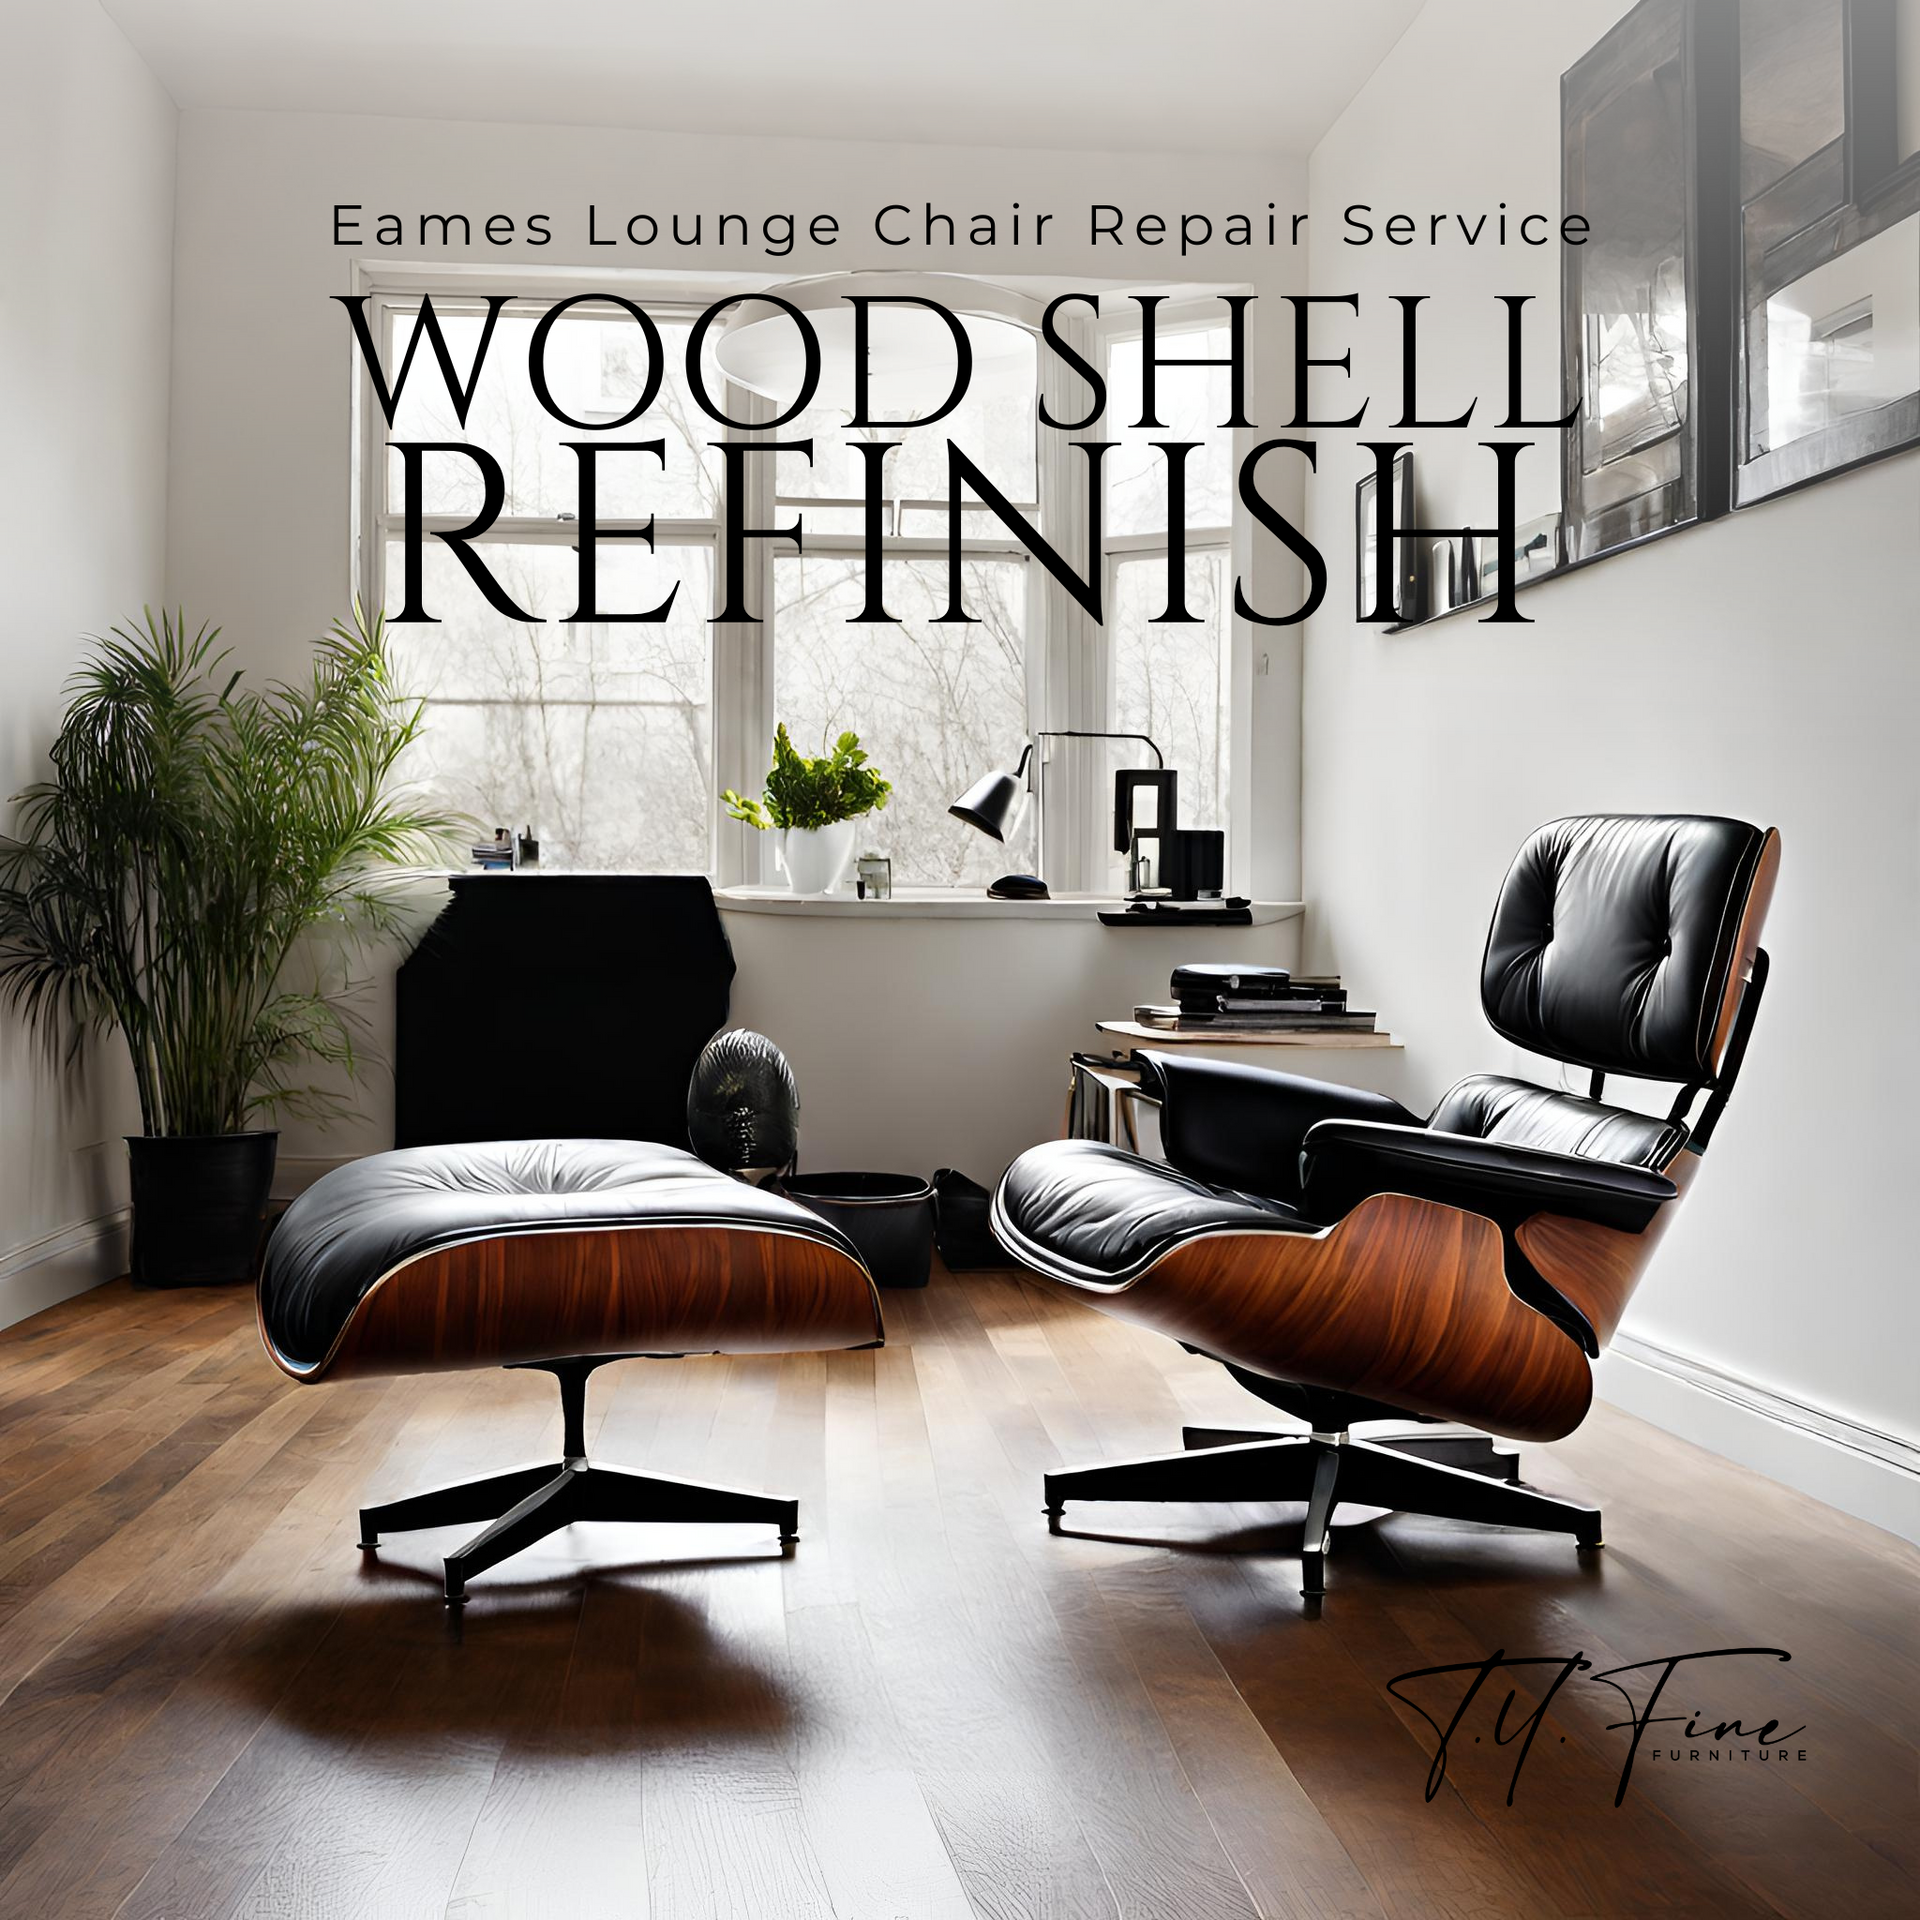 Eames Lounge Chair Repair - Wood Shell Refinish